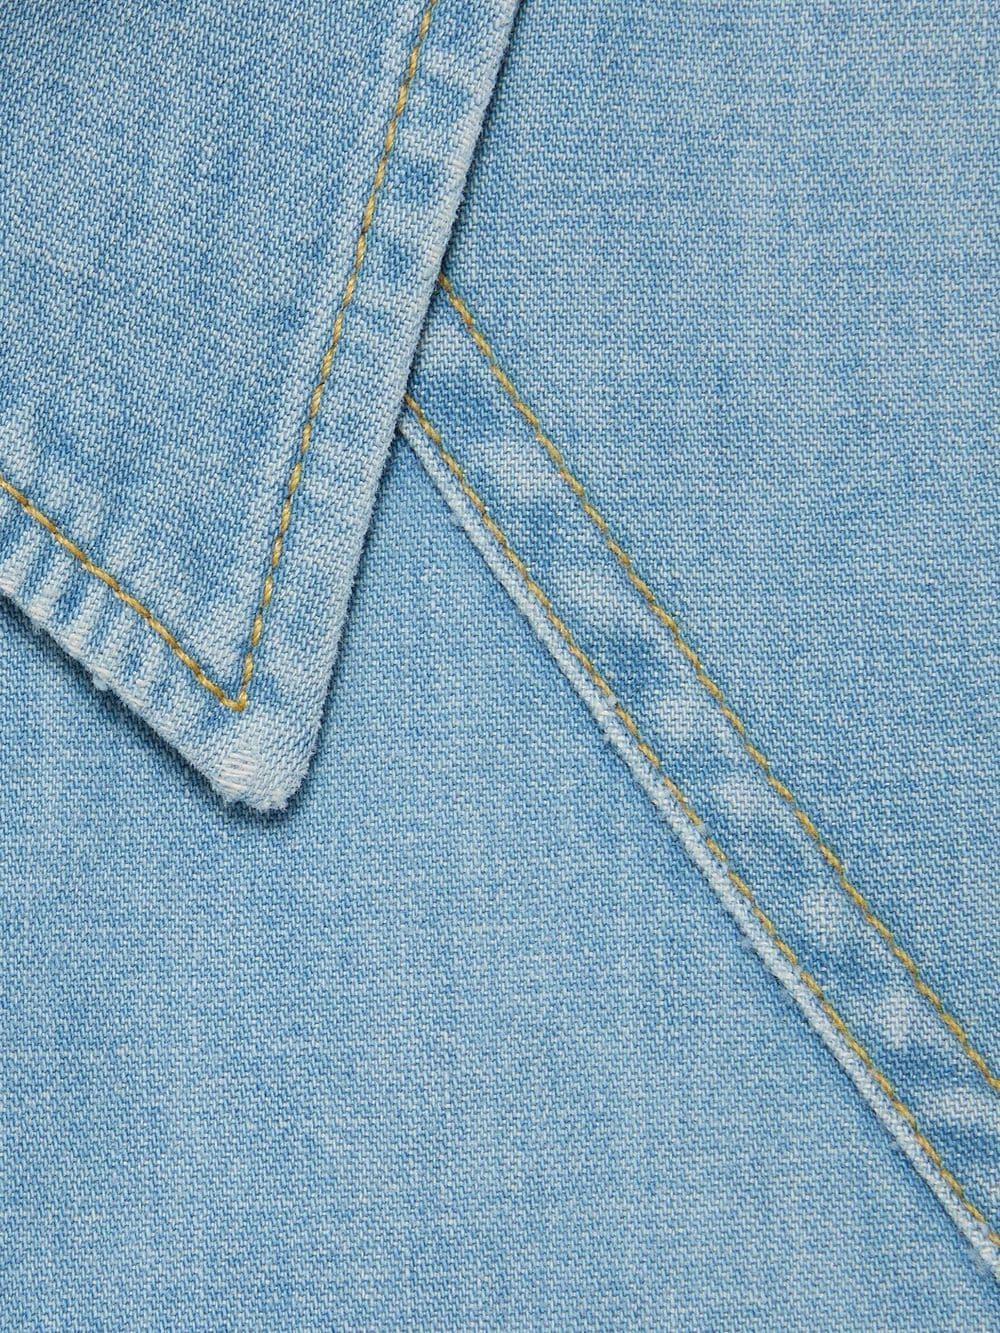 GUCCI Timeless Elegance: Classic Blue Denim Shirt for Men